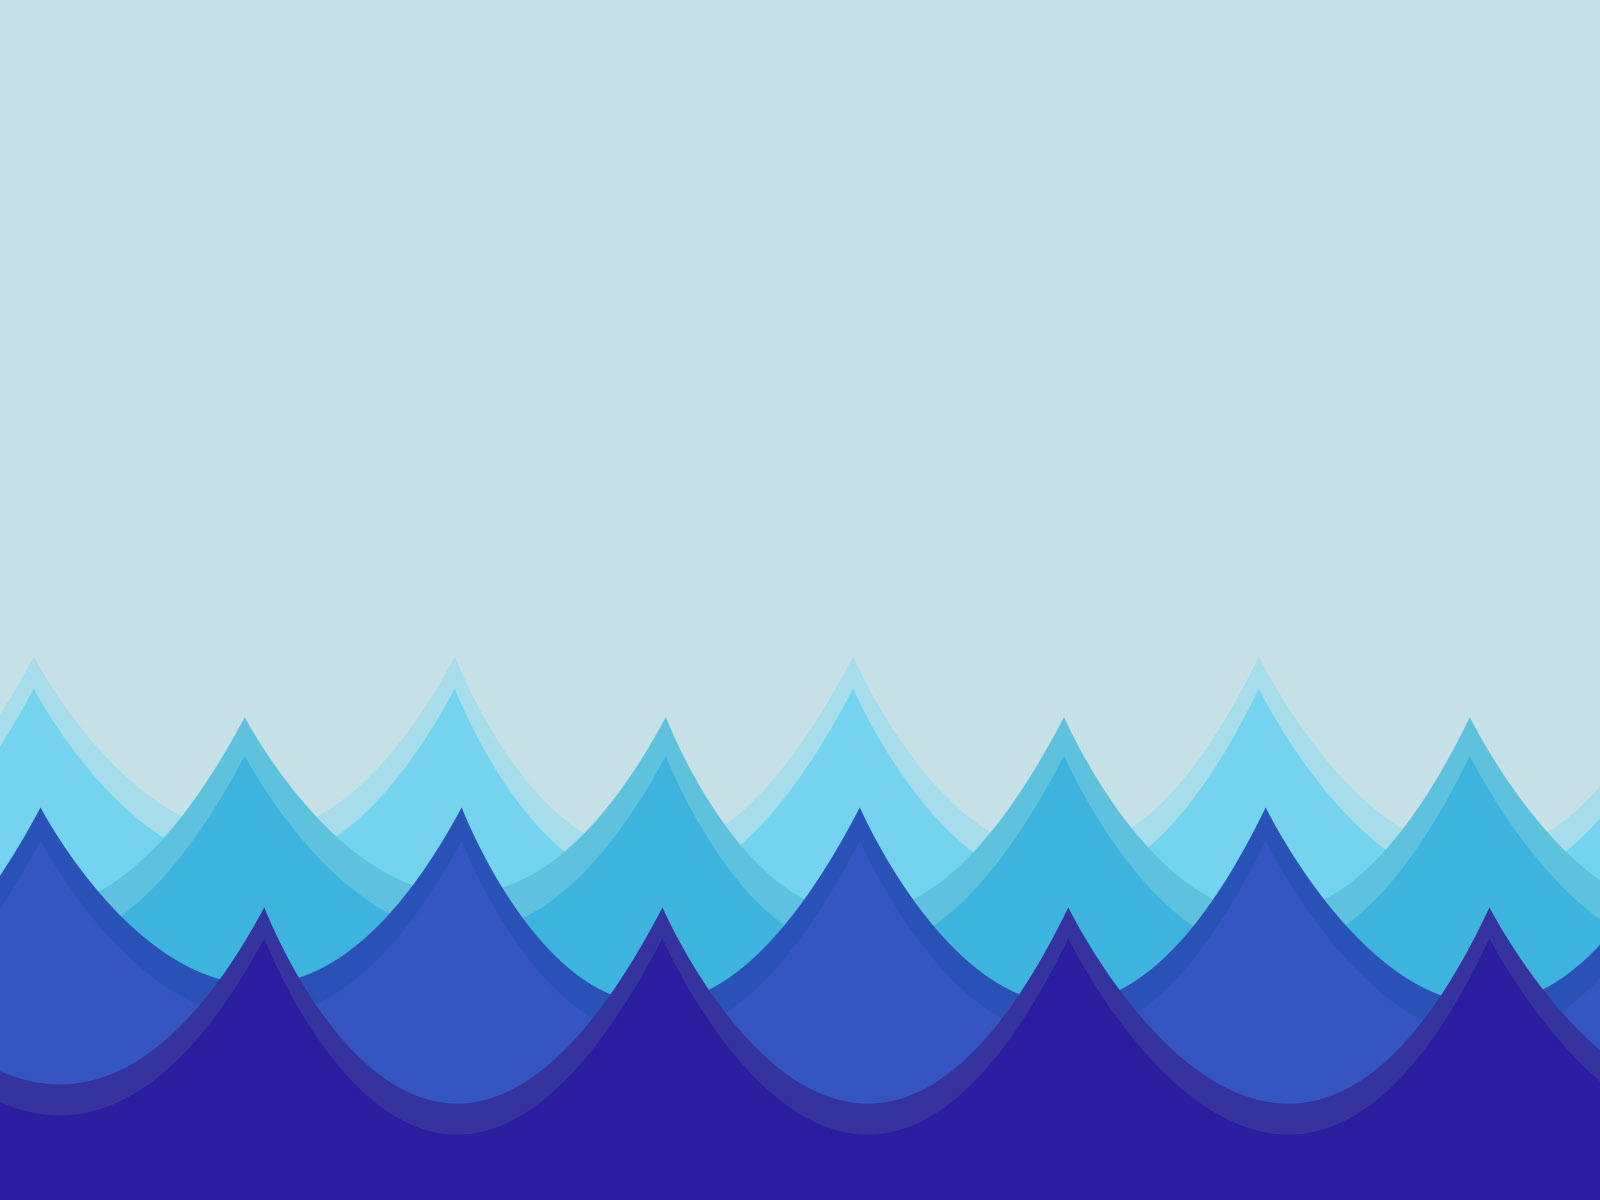 ocean wave border template